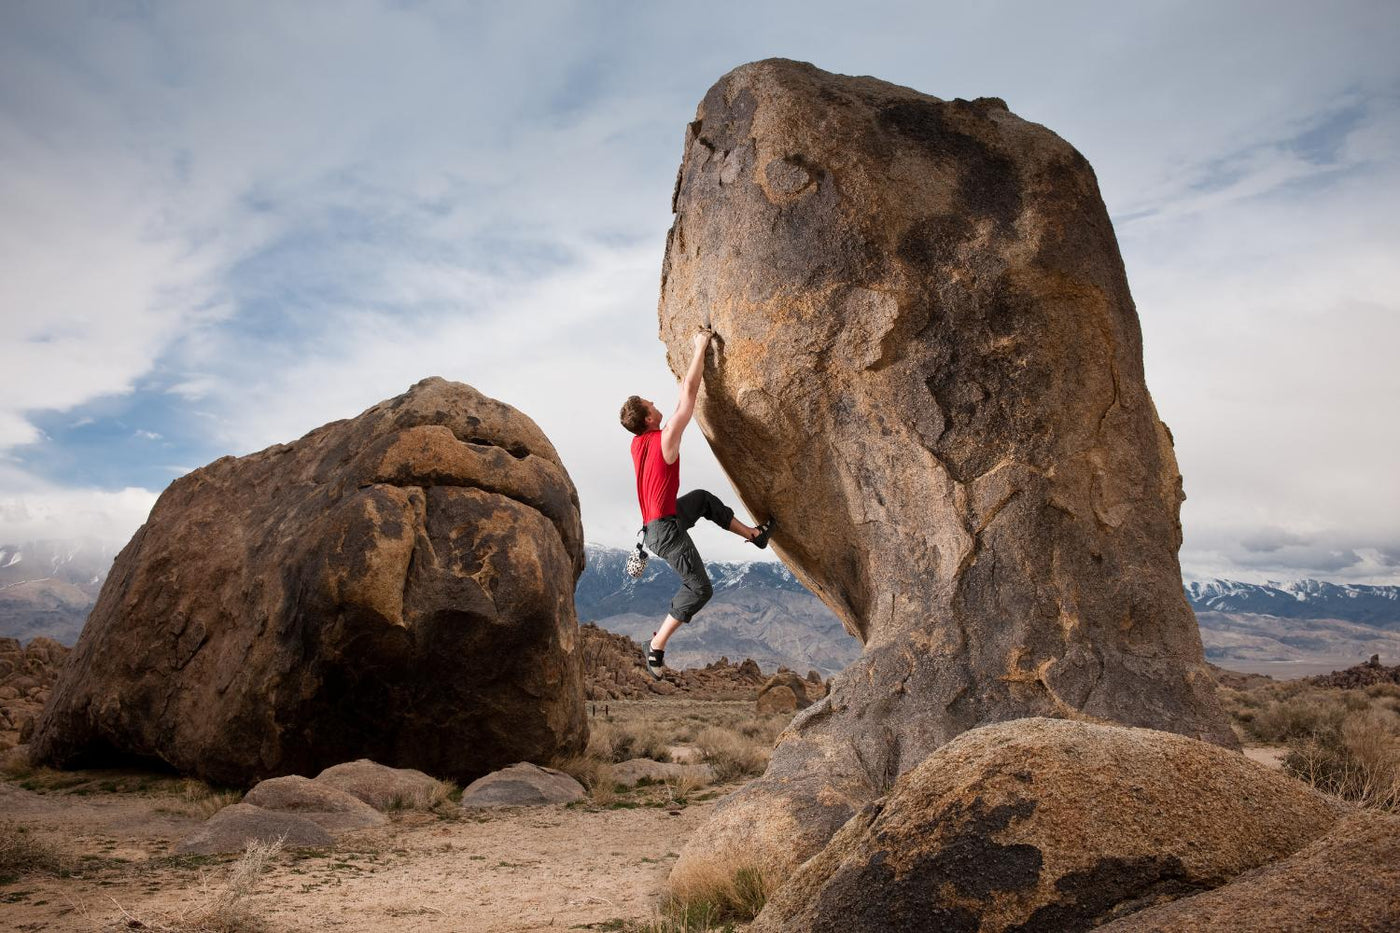 Man in a red shirt Bouldering up a tall boulder 